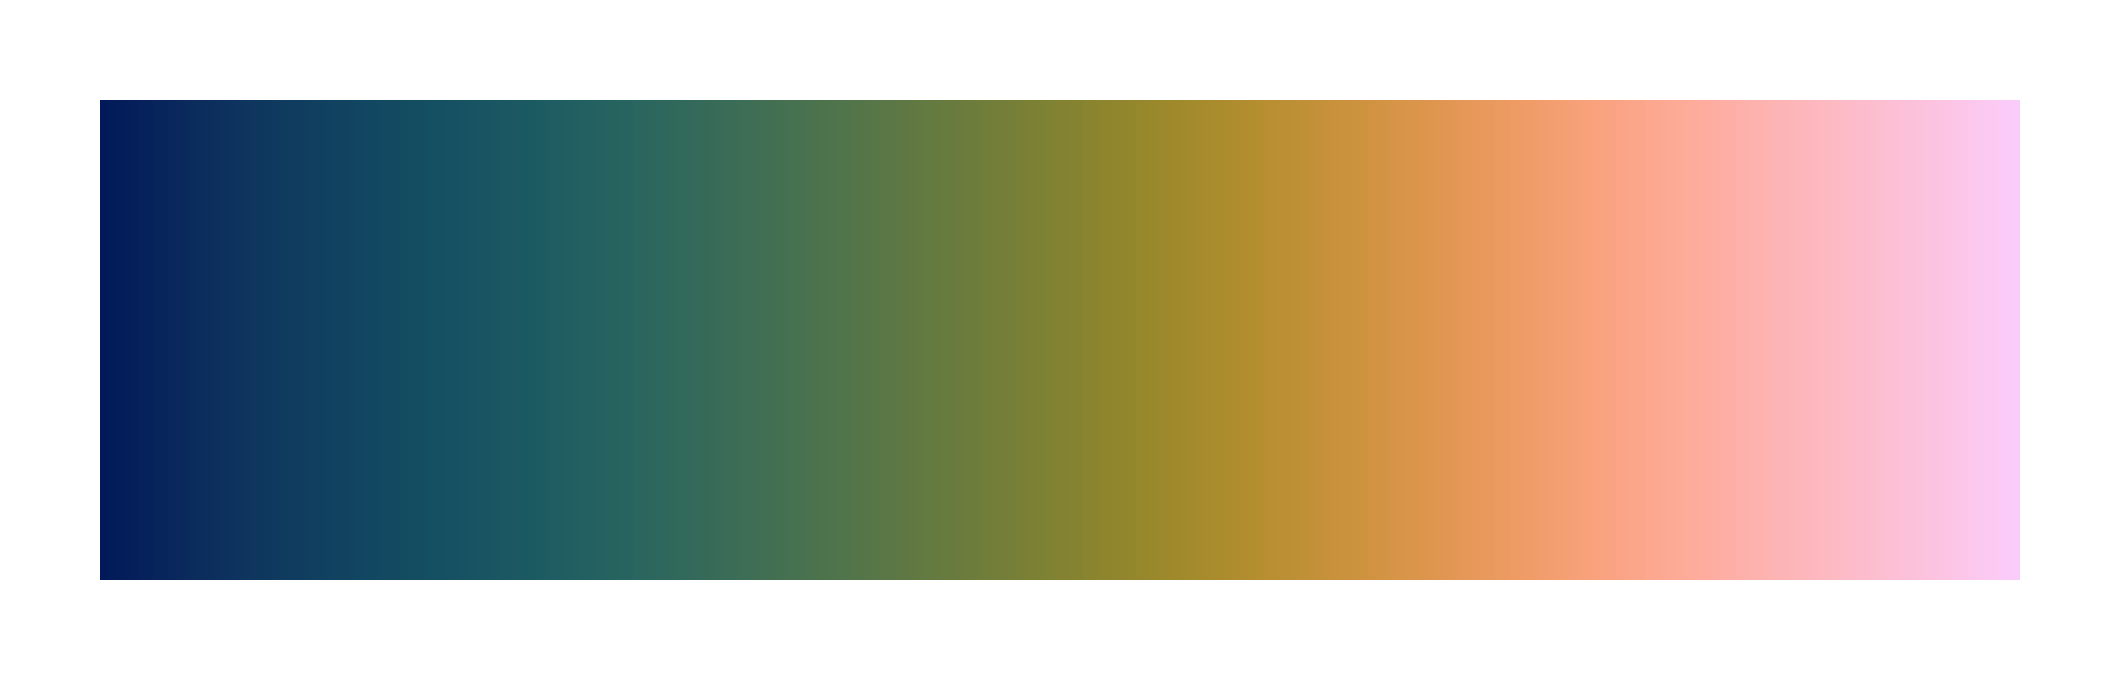 batlow scientific color palette by Fabio Crameri